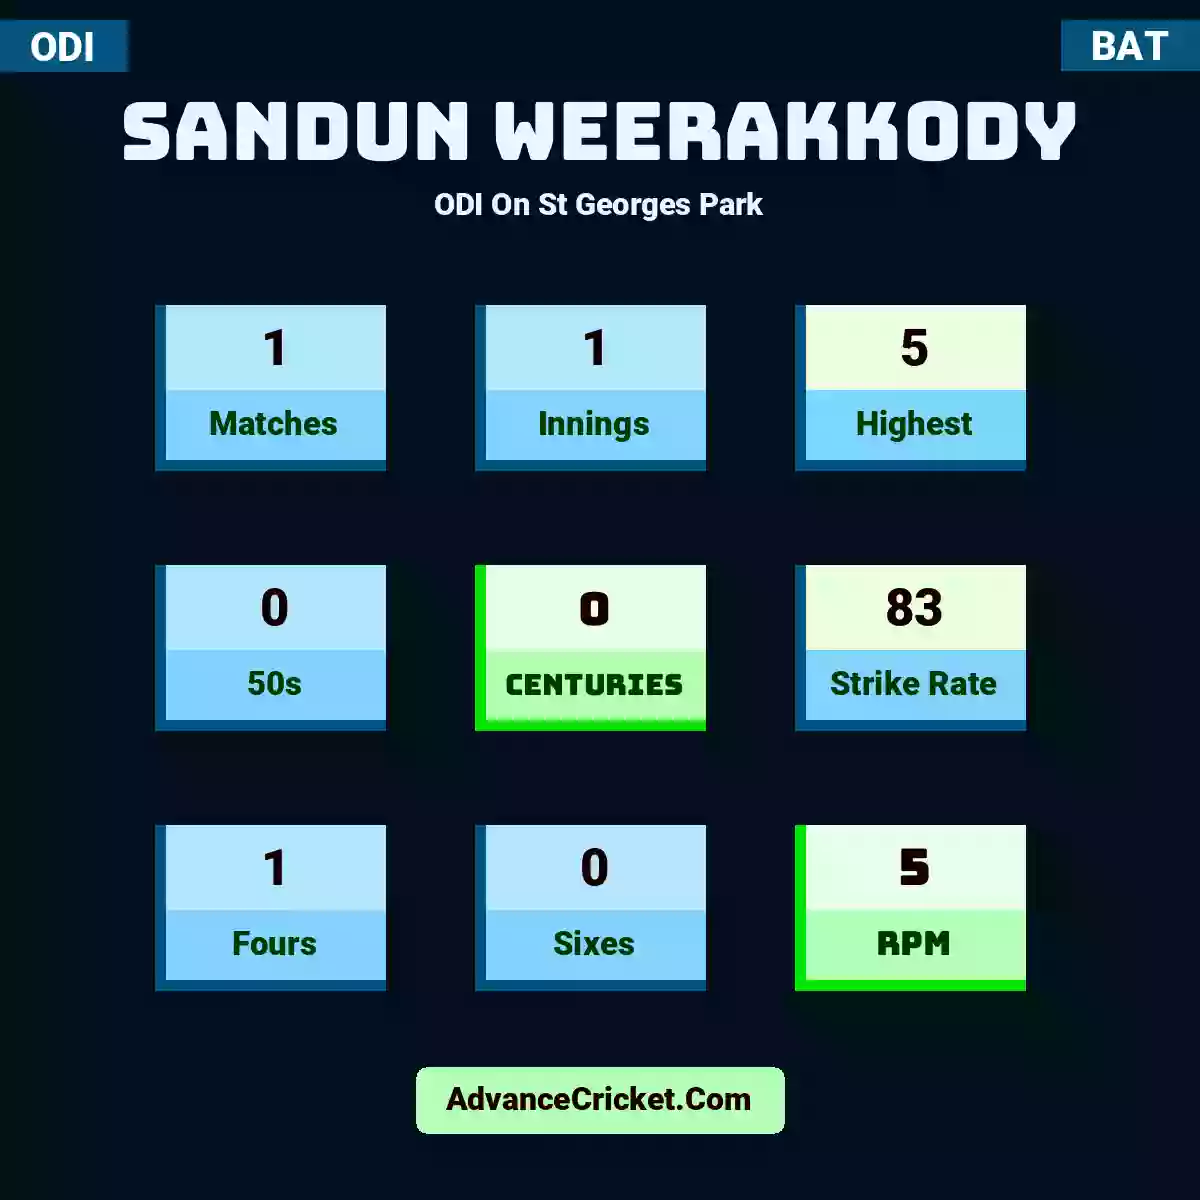 Sandun Weerakkody ODI  On St Georges Park, Sandun Weerakkody played 1 matches, scored 5 runs as highest, 0 half-centuries, and 0 centuries, with a strike rate of 83. S.Weerakkody hit 1 fours and 0 sixes, with an RPM of 5.